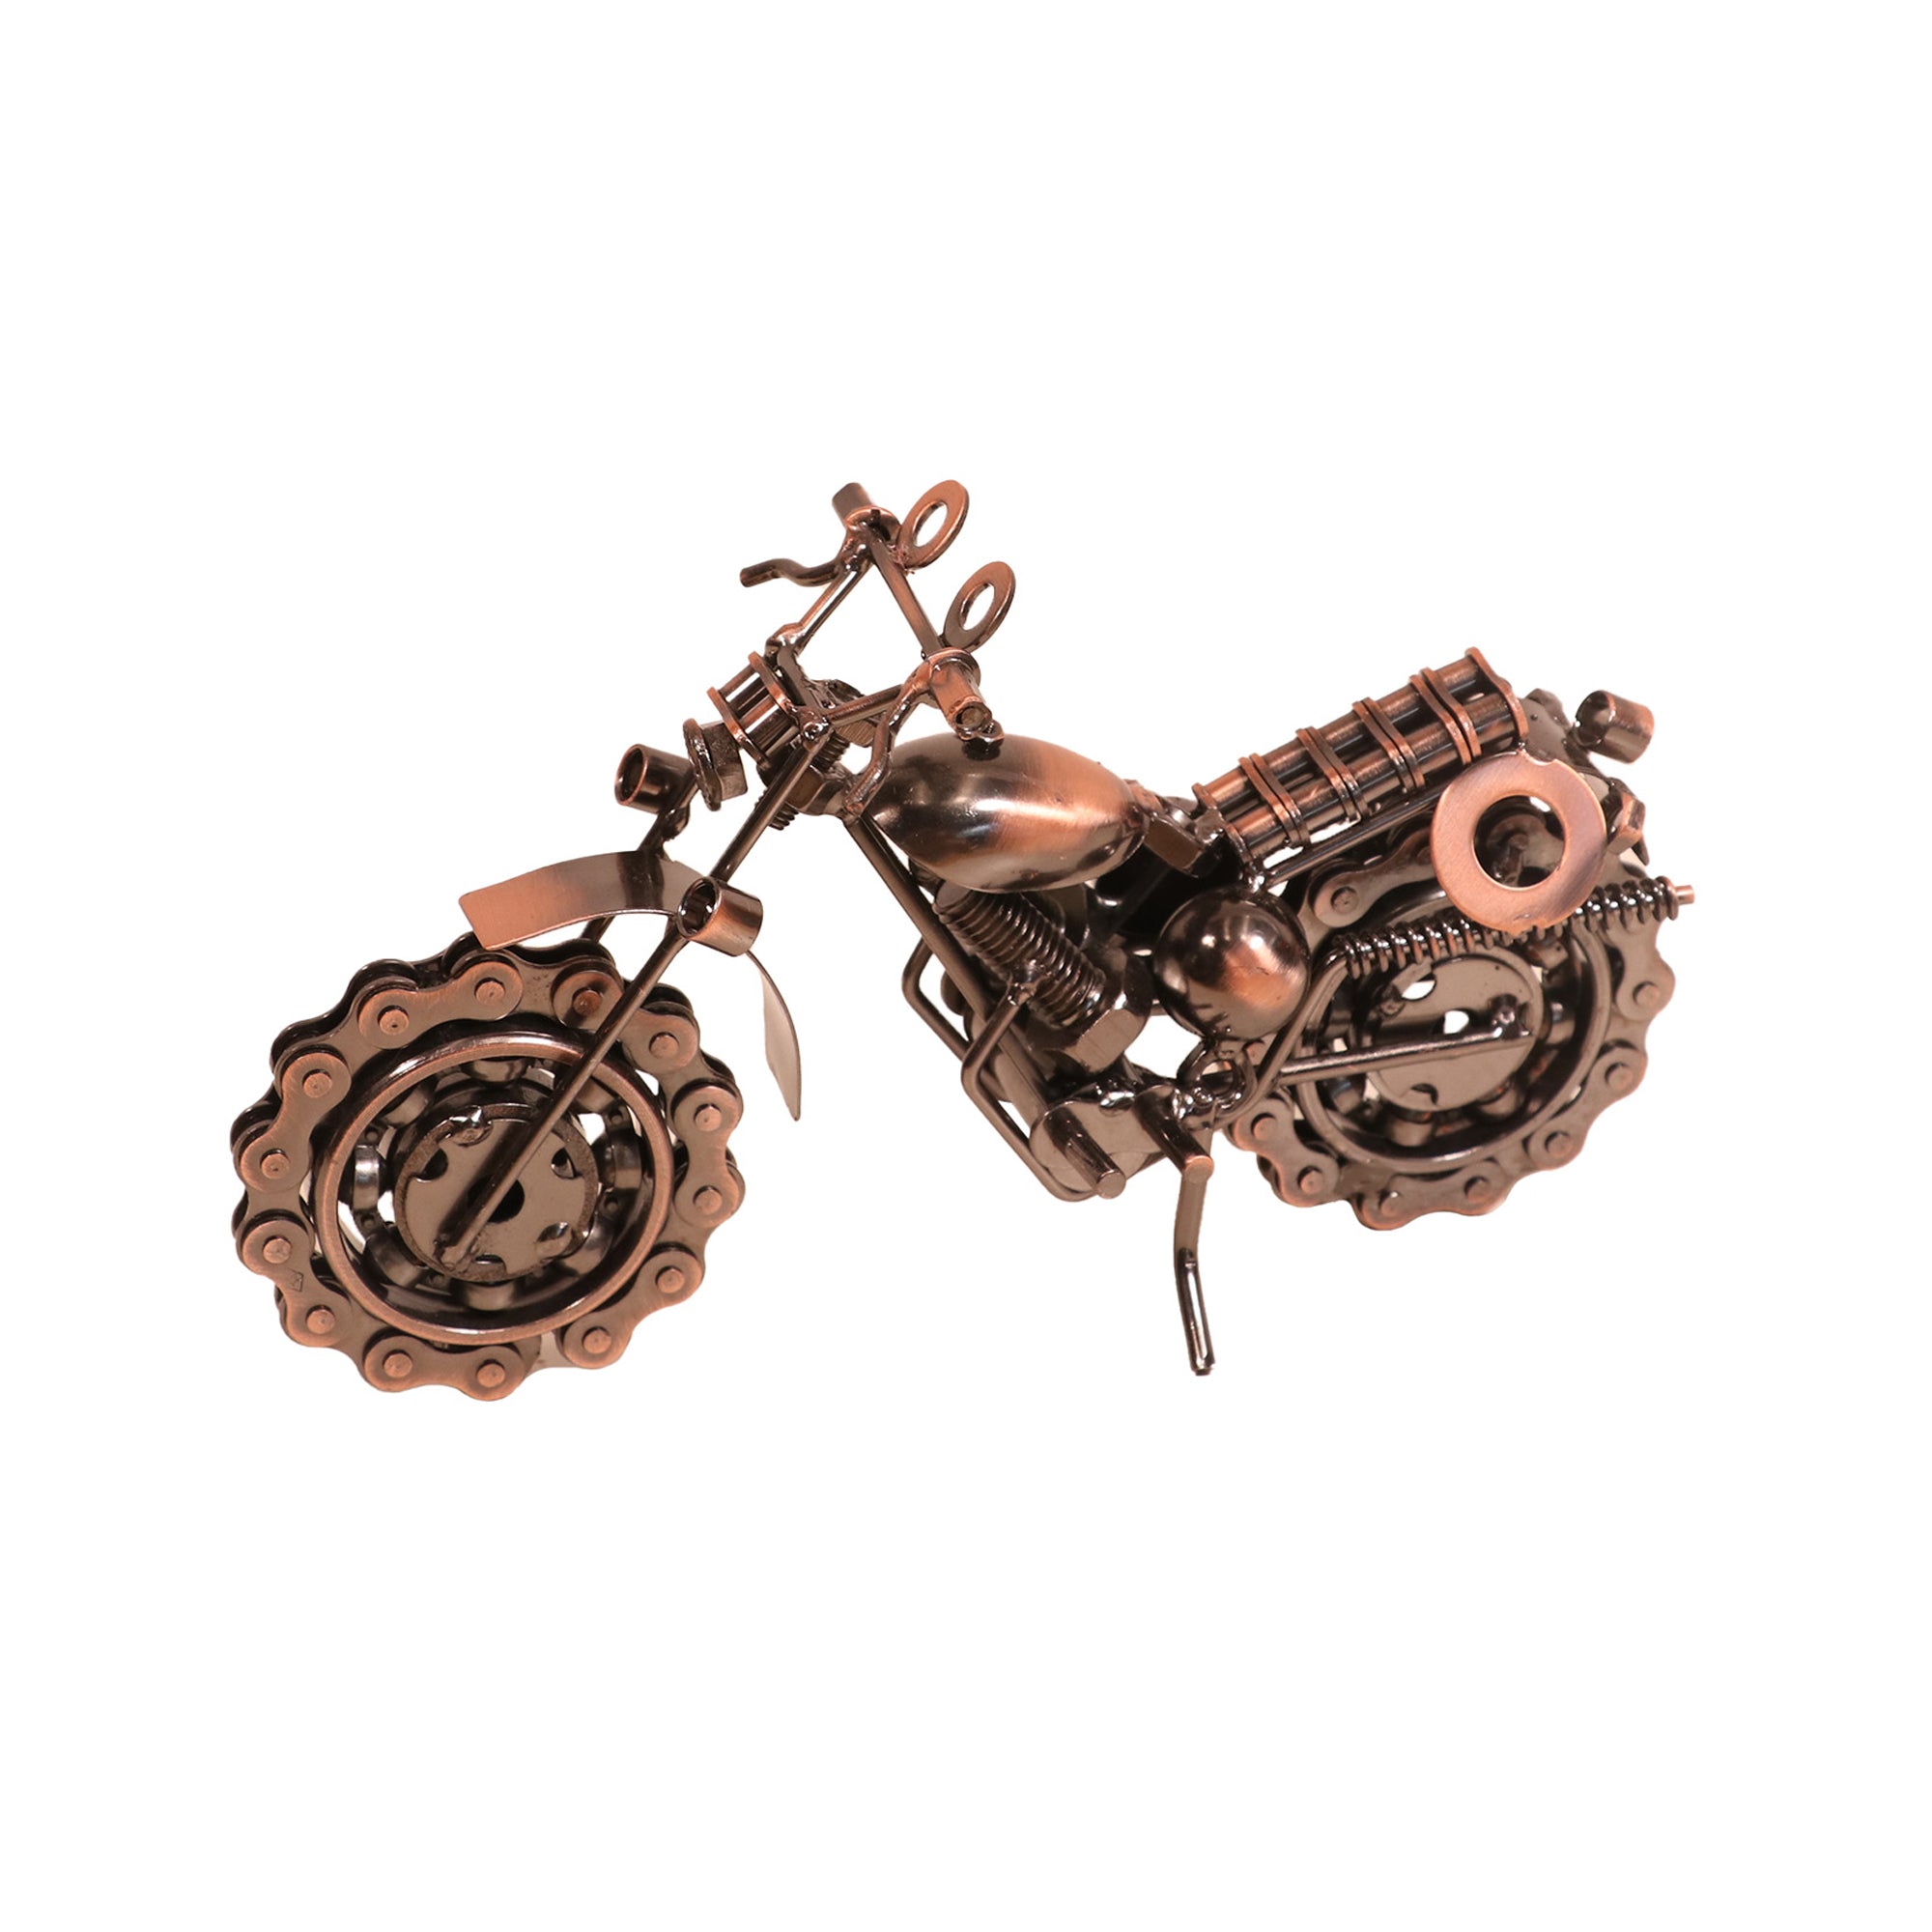 Cool Iron Bike Vehicle figurine